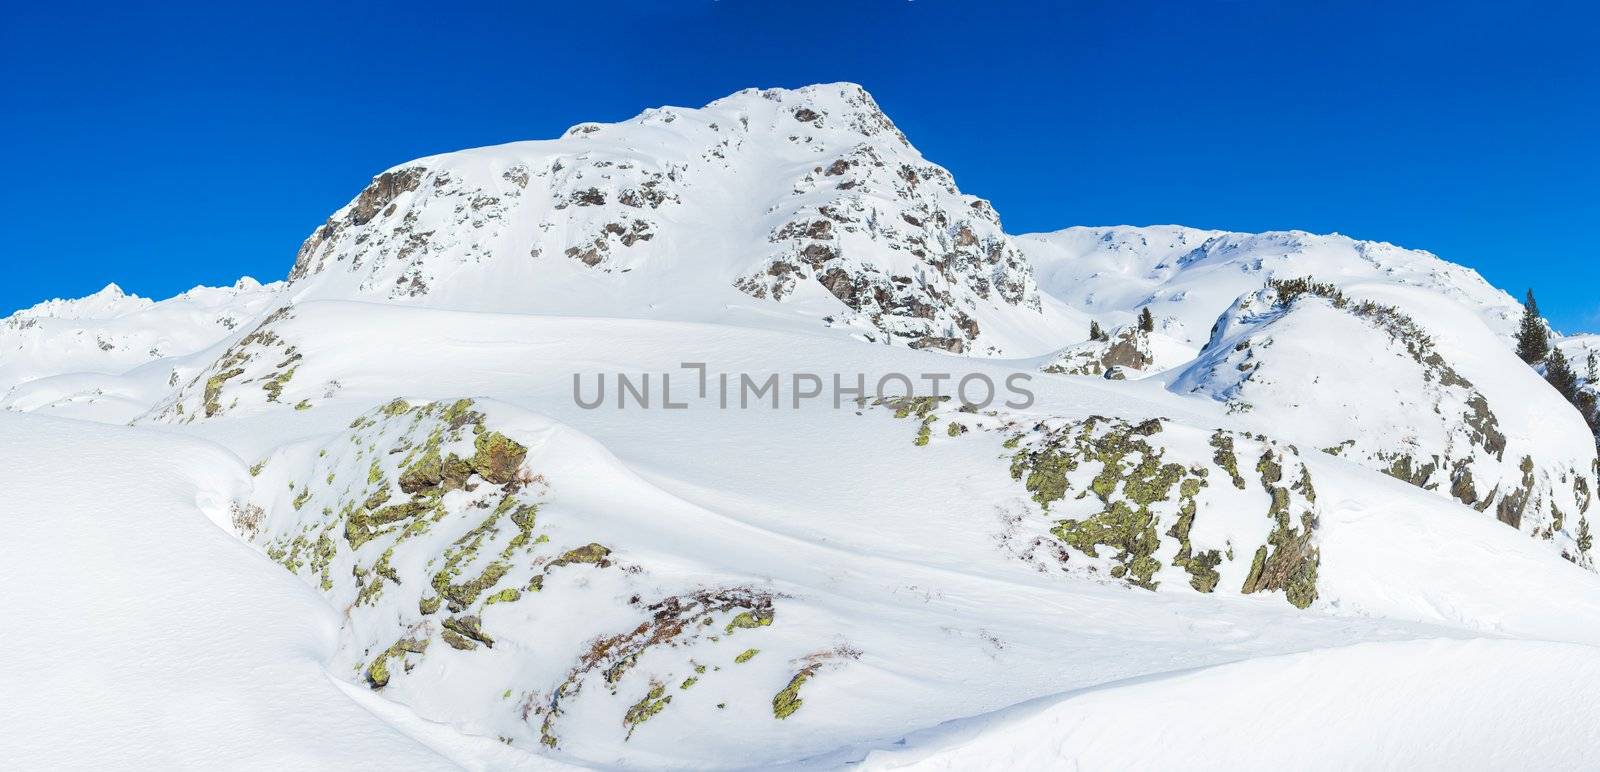 Alpine mountains under the snow in winter by maxoliki